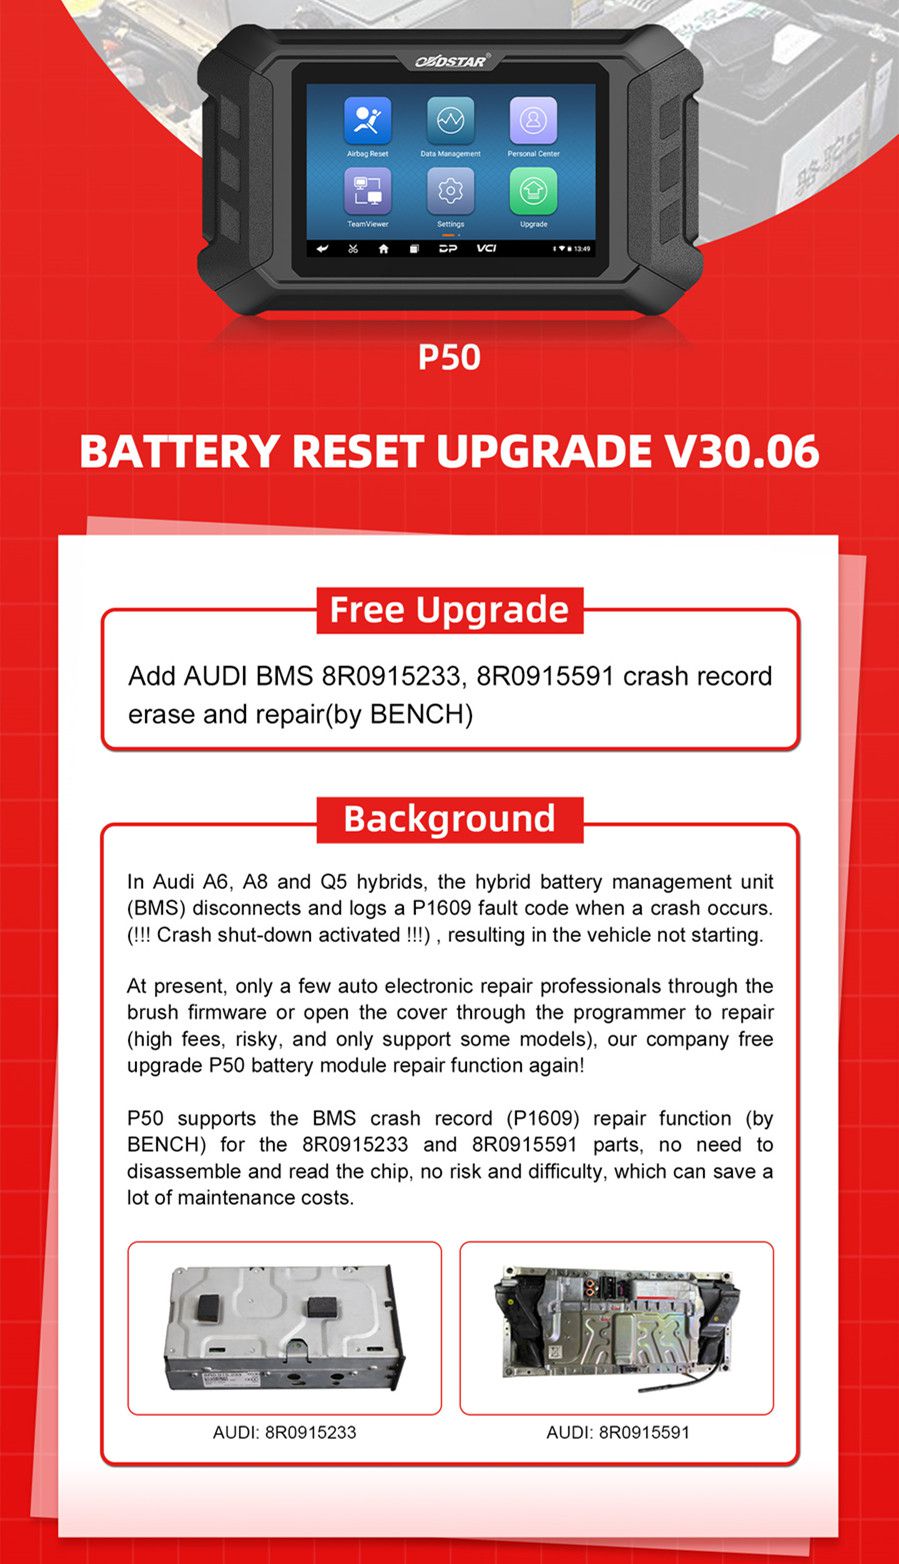 P50 BATTERY RESET UPGRADE V30.06